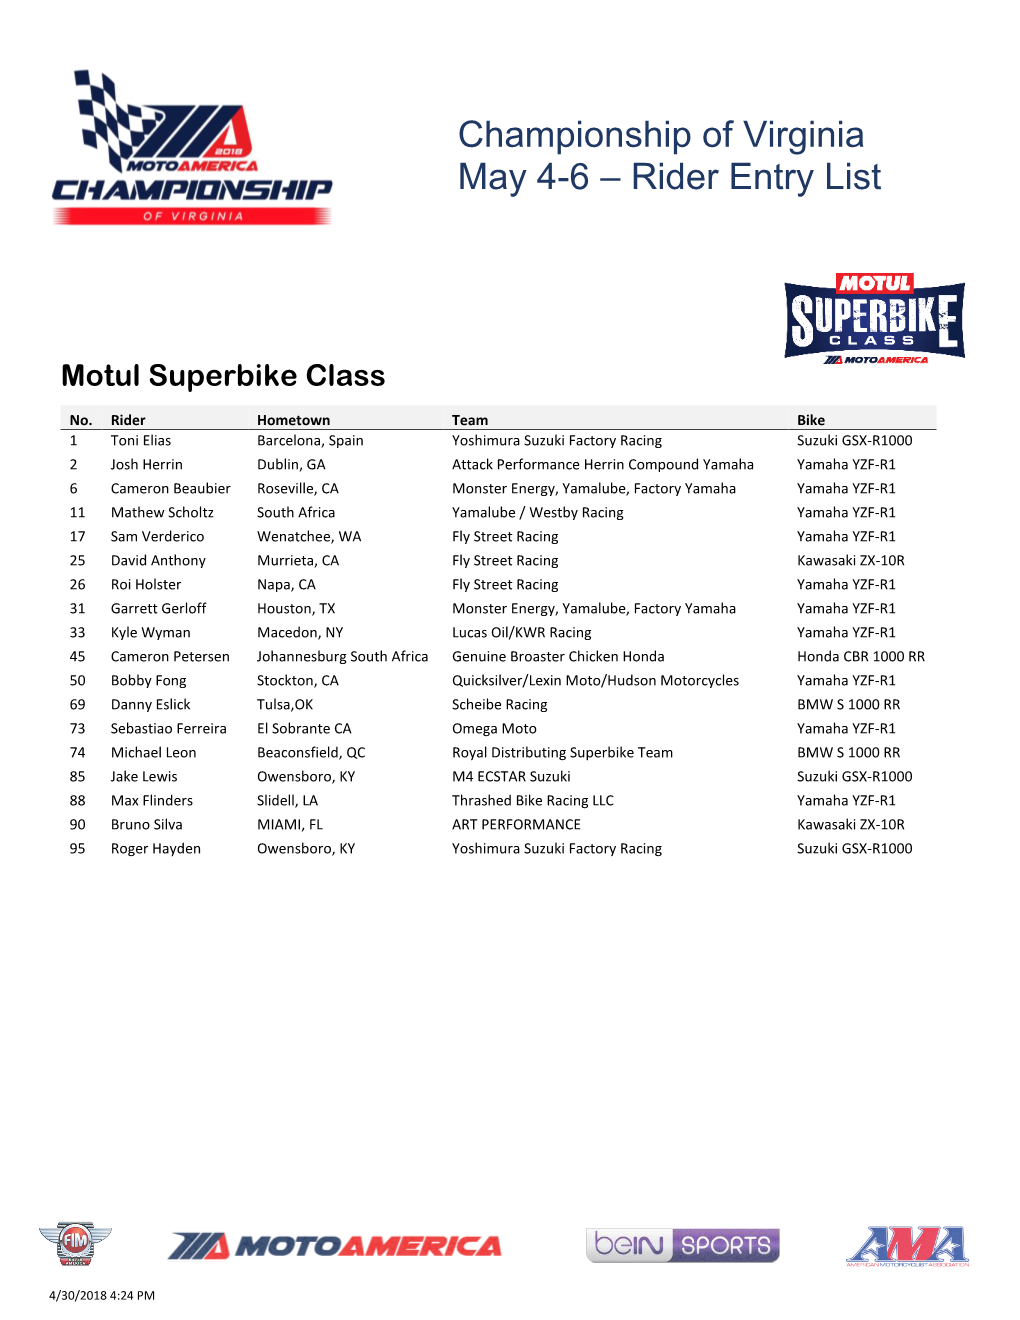 Championship of Virginia May 4-6 – Rider Entry List